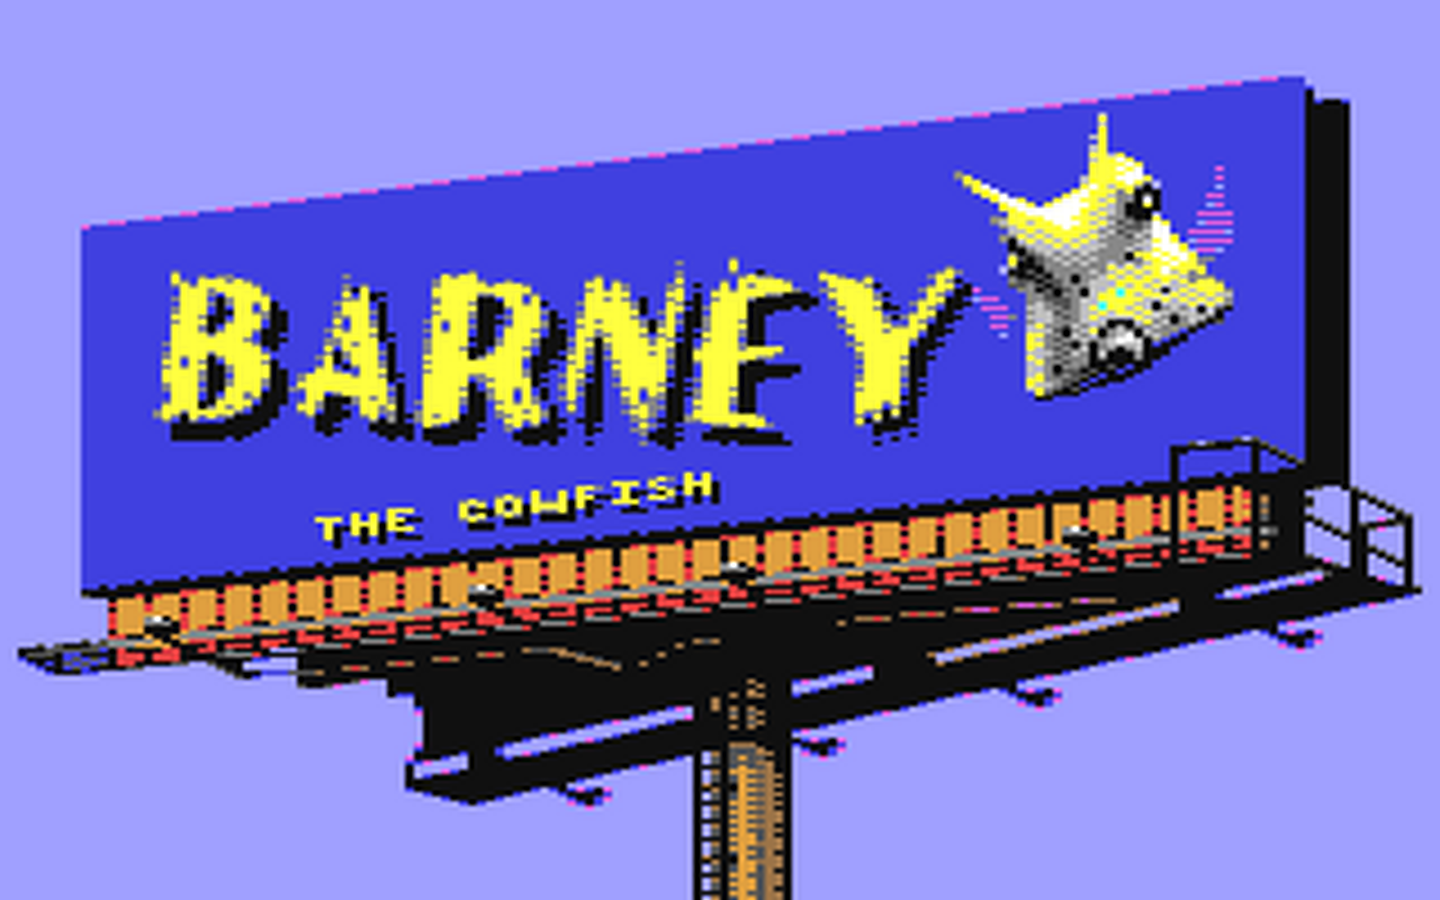 C64 GameBase Barney_-_The_Cowfish (Created_with_SEUCK) 2010